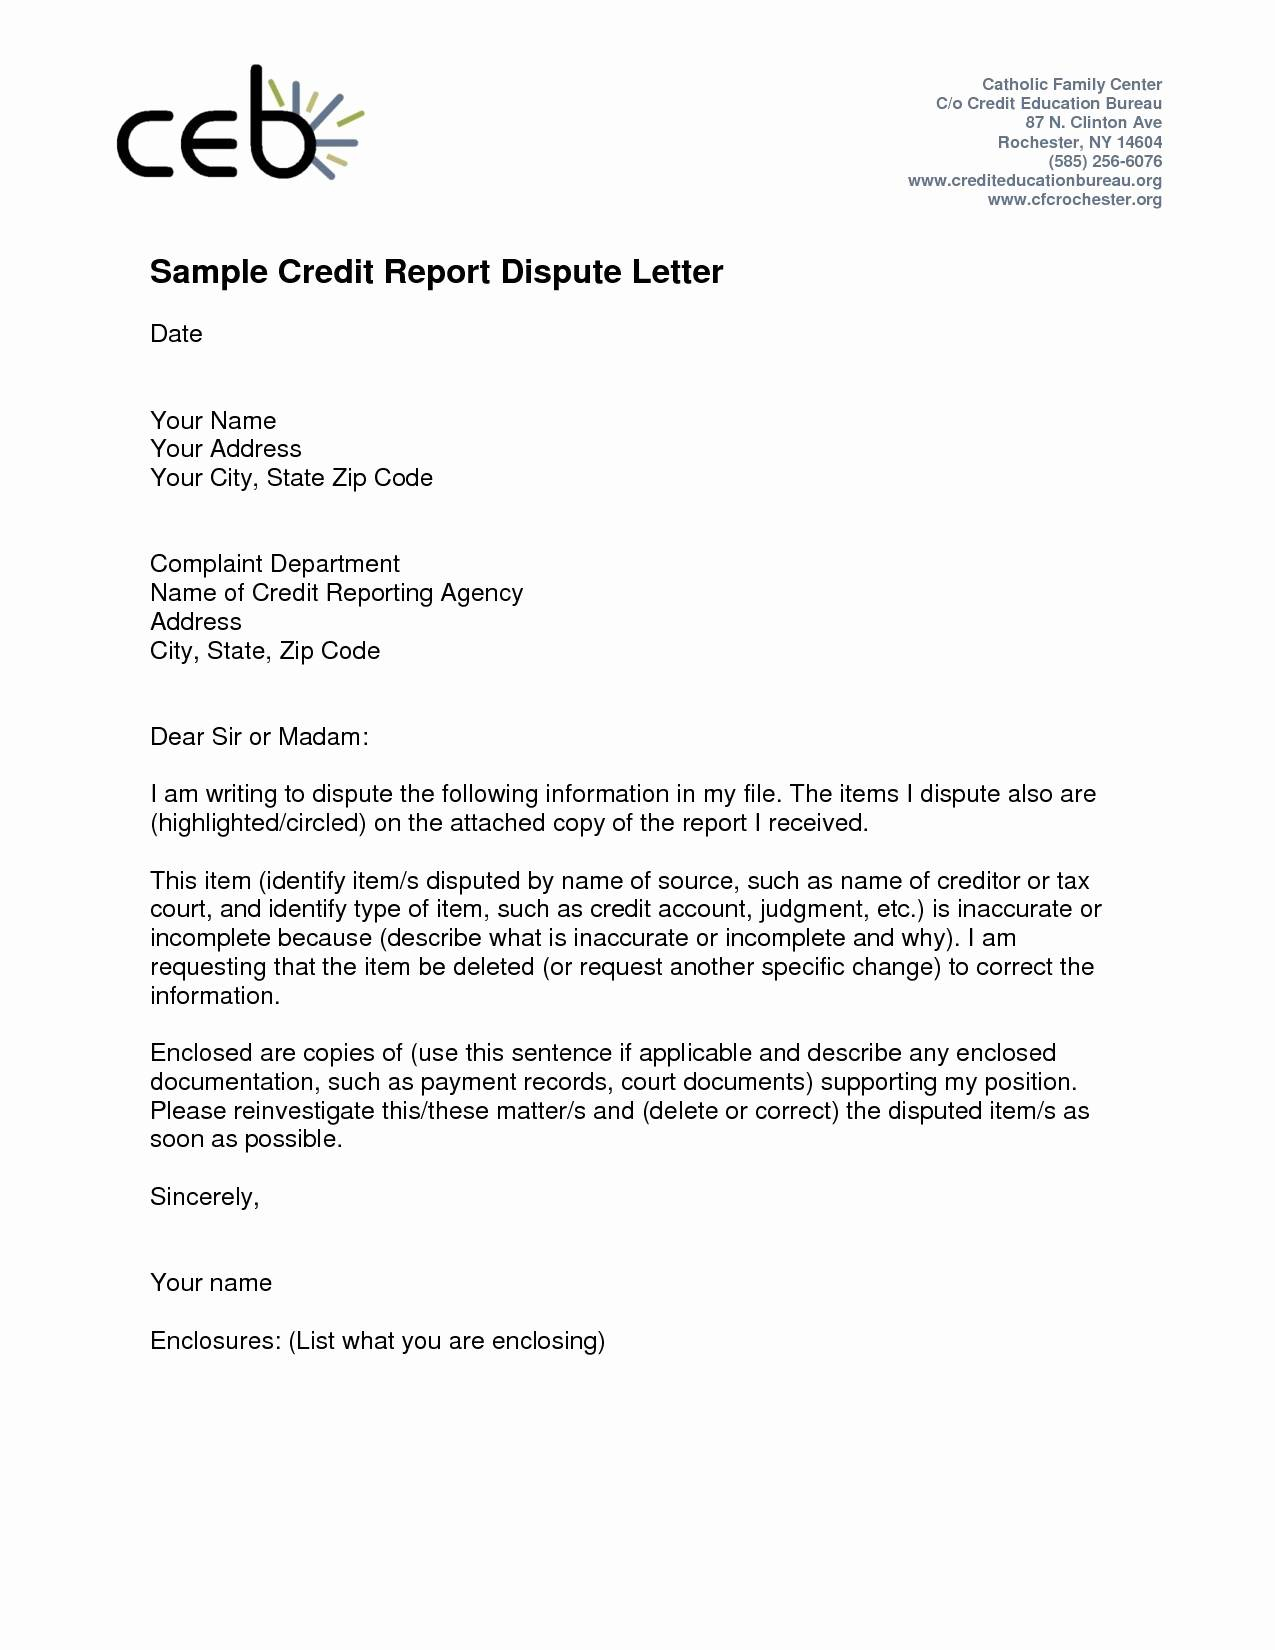 Write credit report request